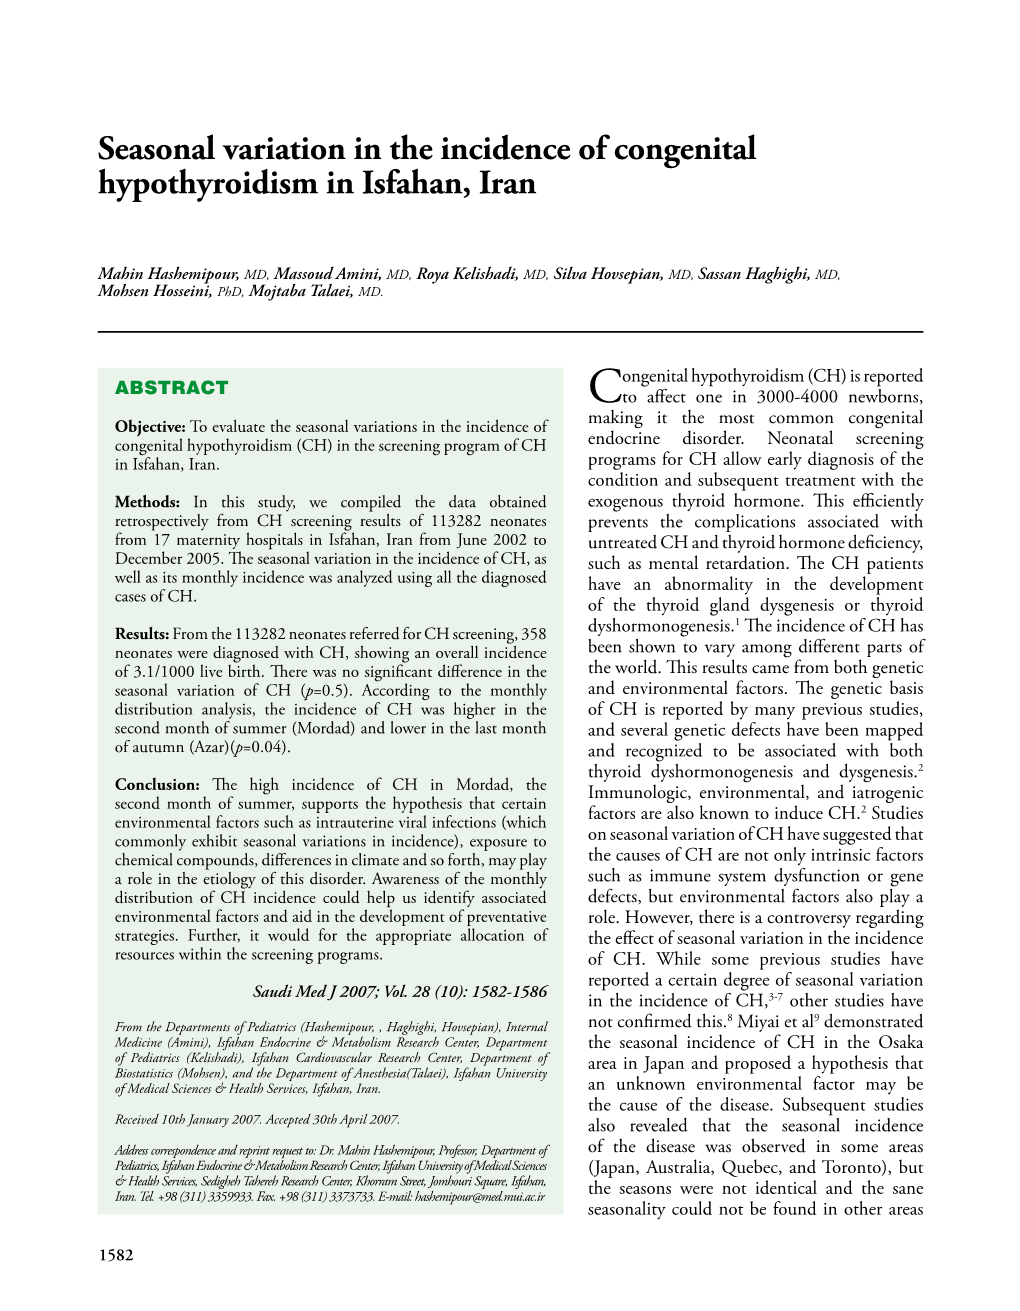 Seasonal Variation in the Incidence of Congenital Hypothyroidism in Isfahan, Iran